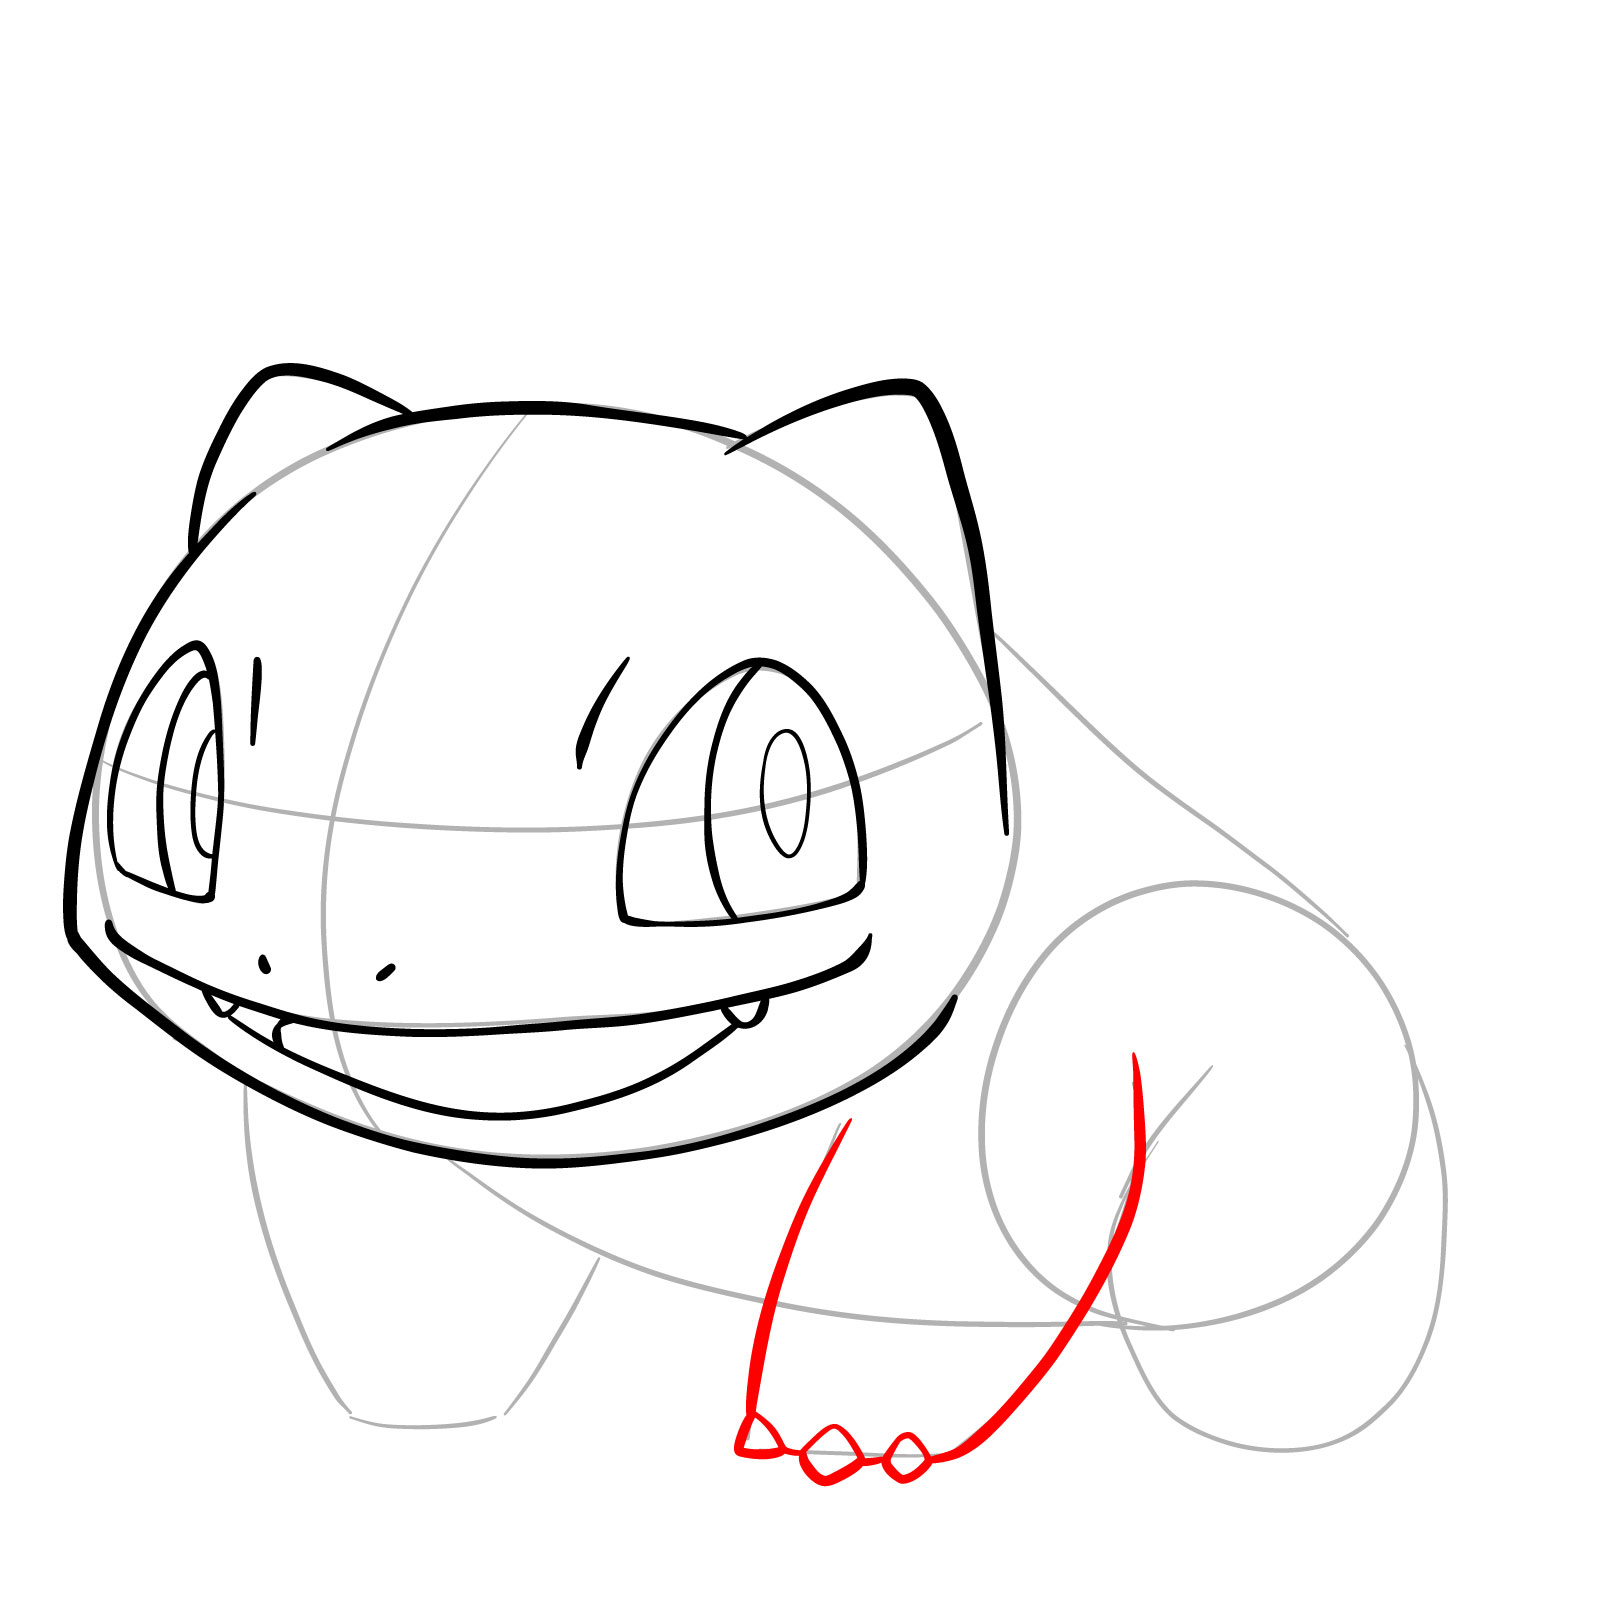 How to draw Bulbasaur - step 12